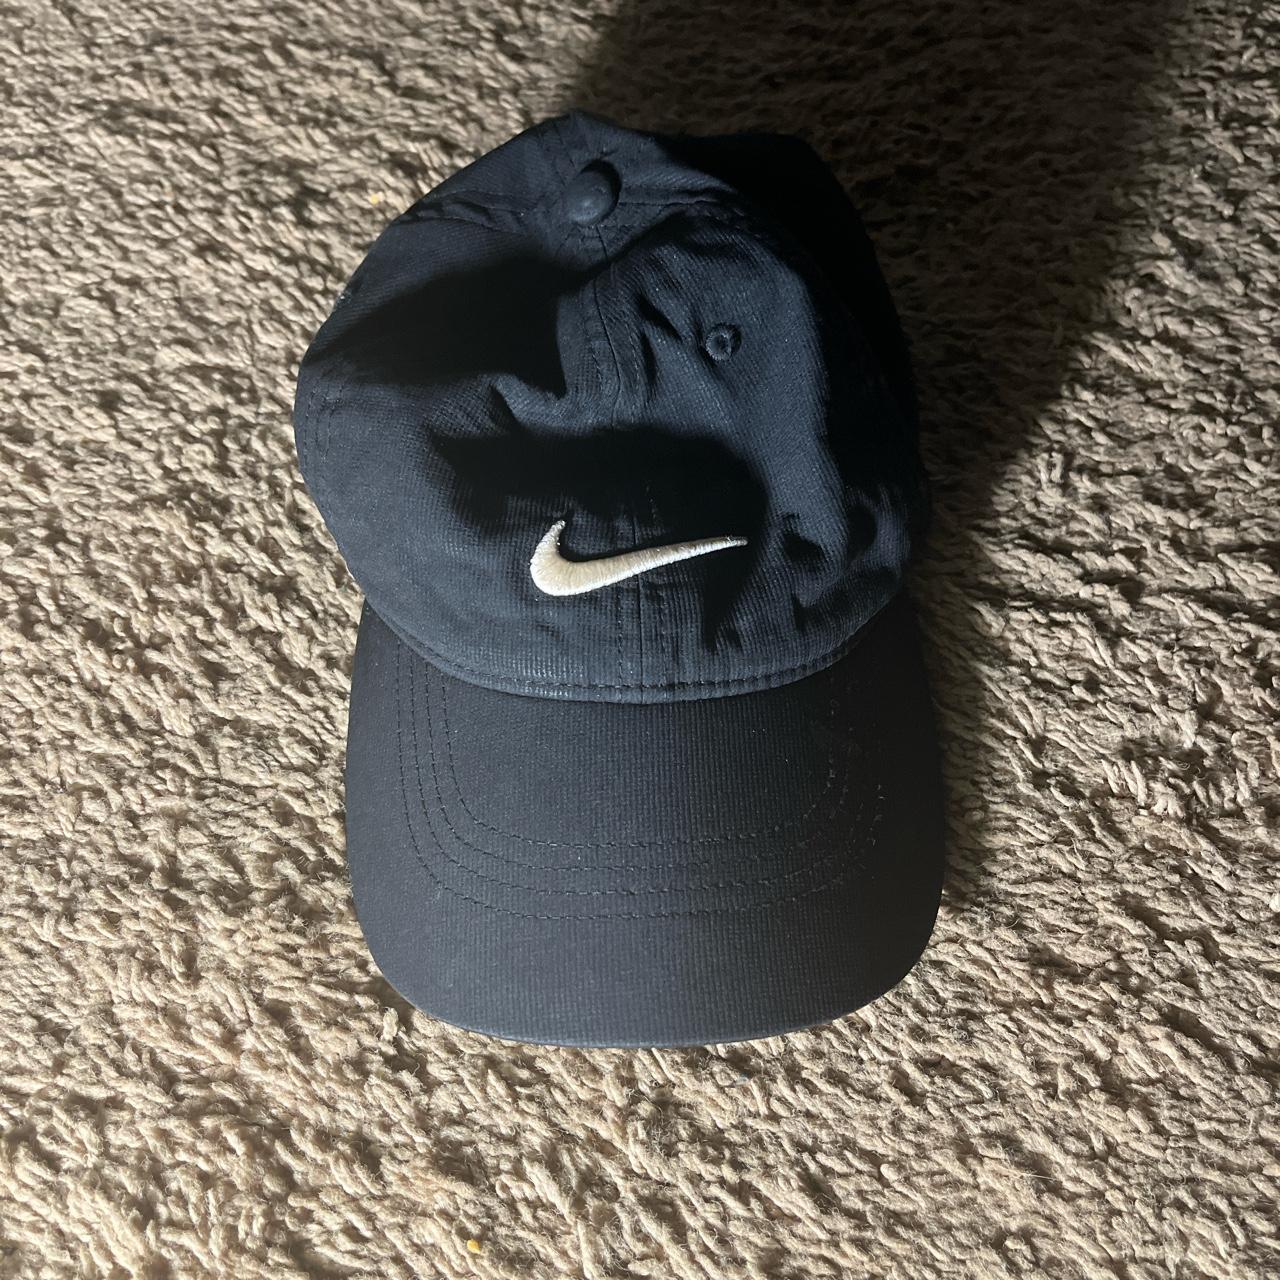 Dri fit Nike hat Worn a few times 5$ shipping - Depop